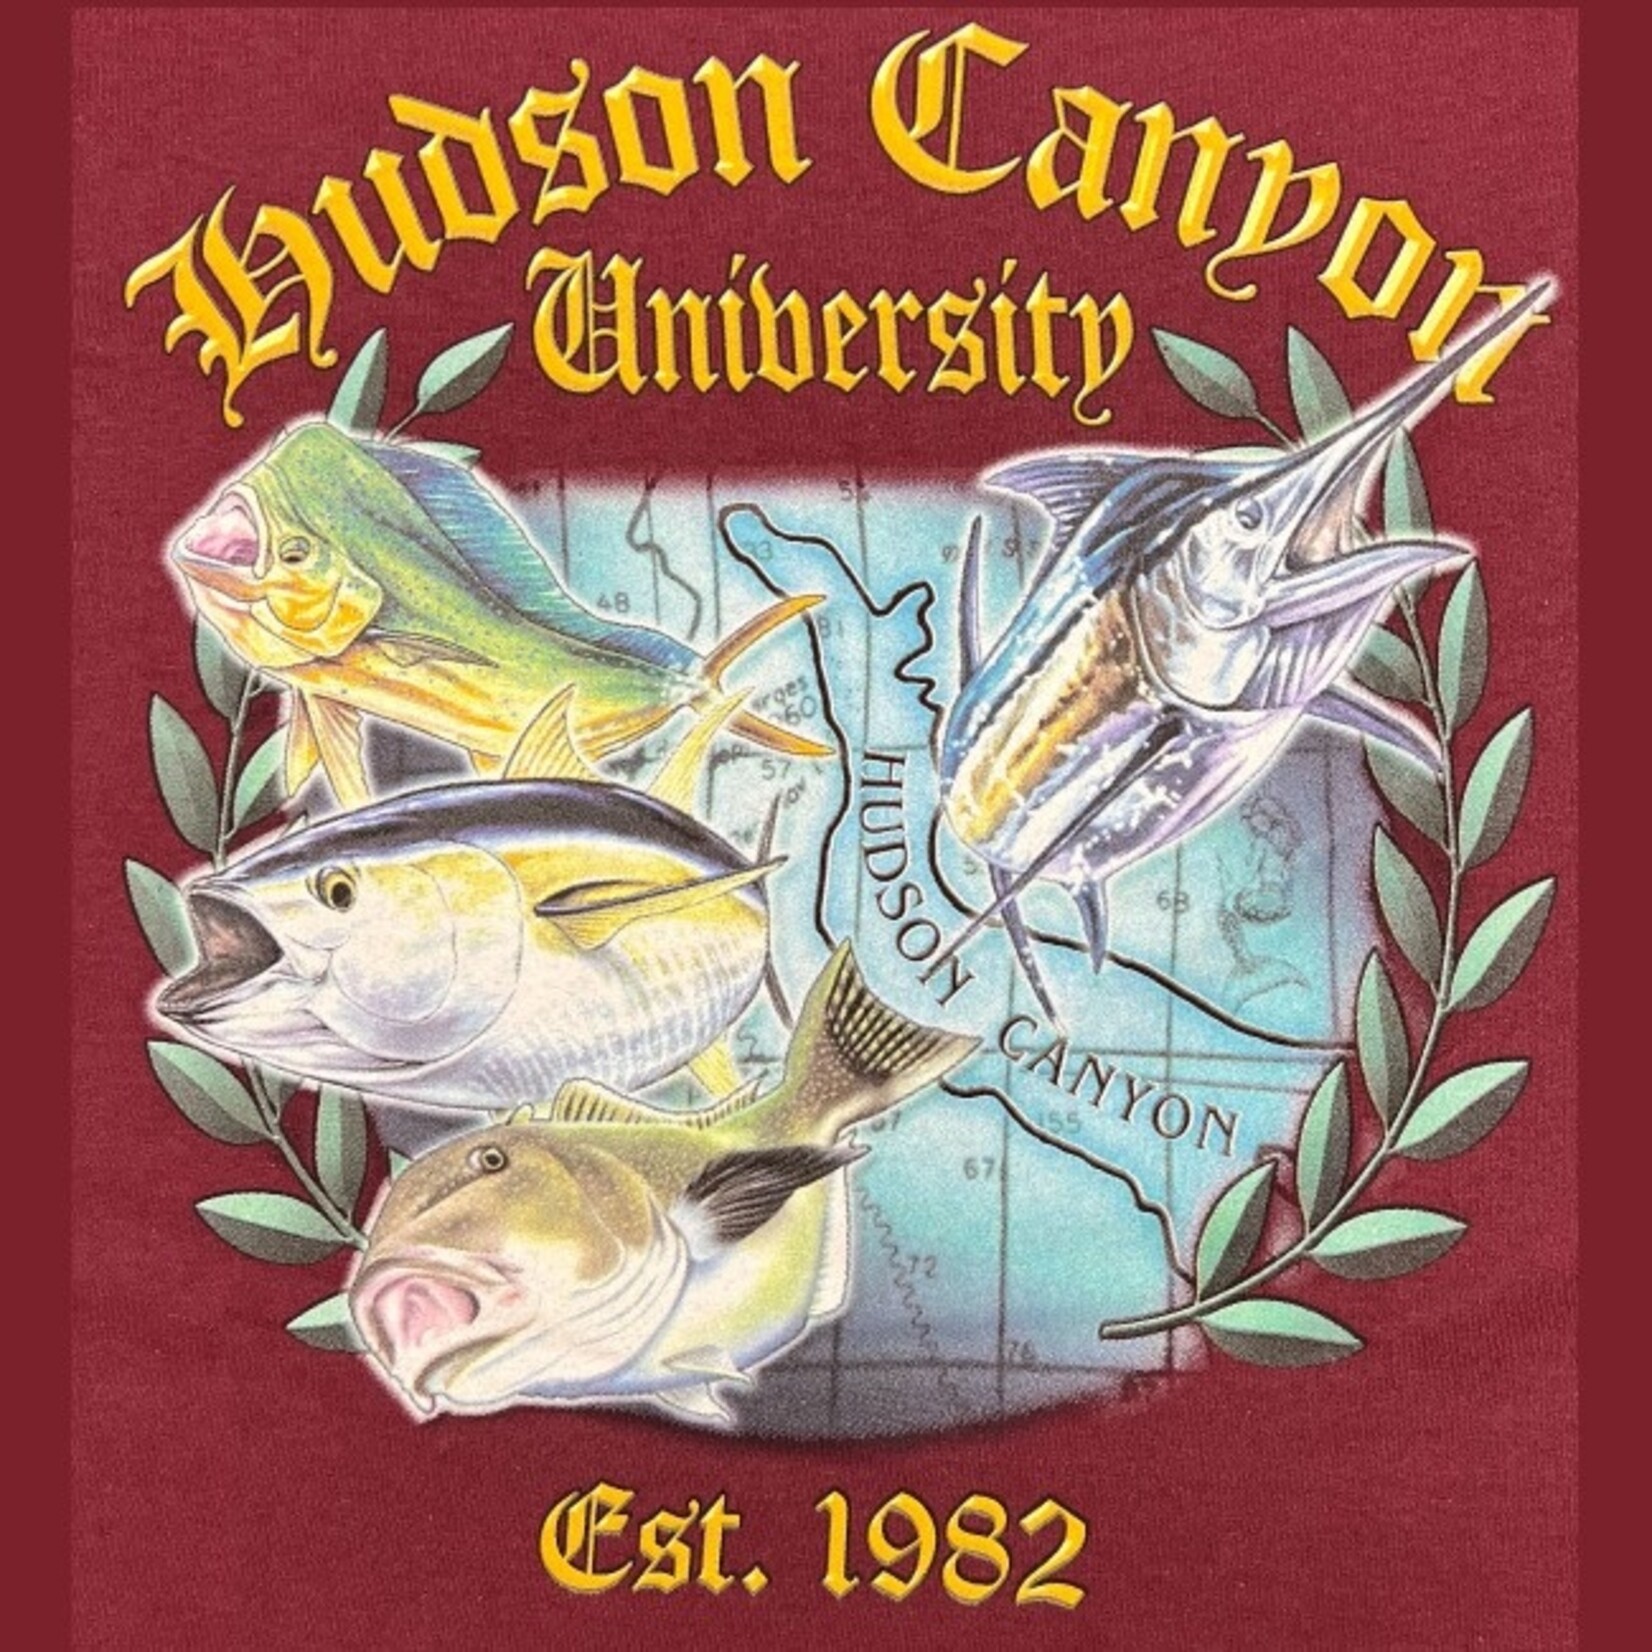 The Reel Seat hudson canyon university t-shirt